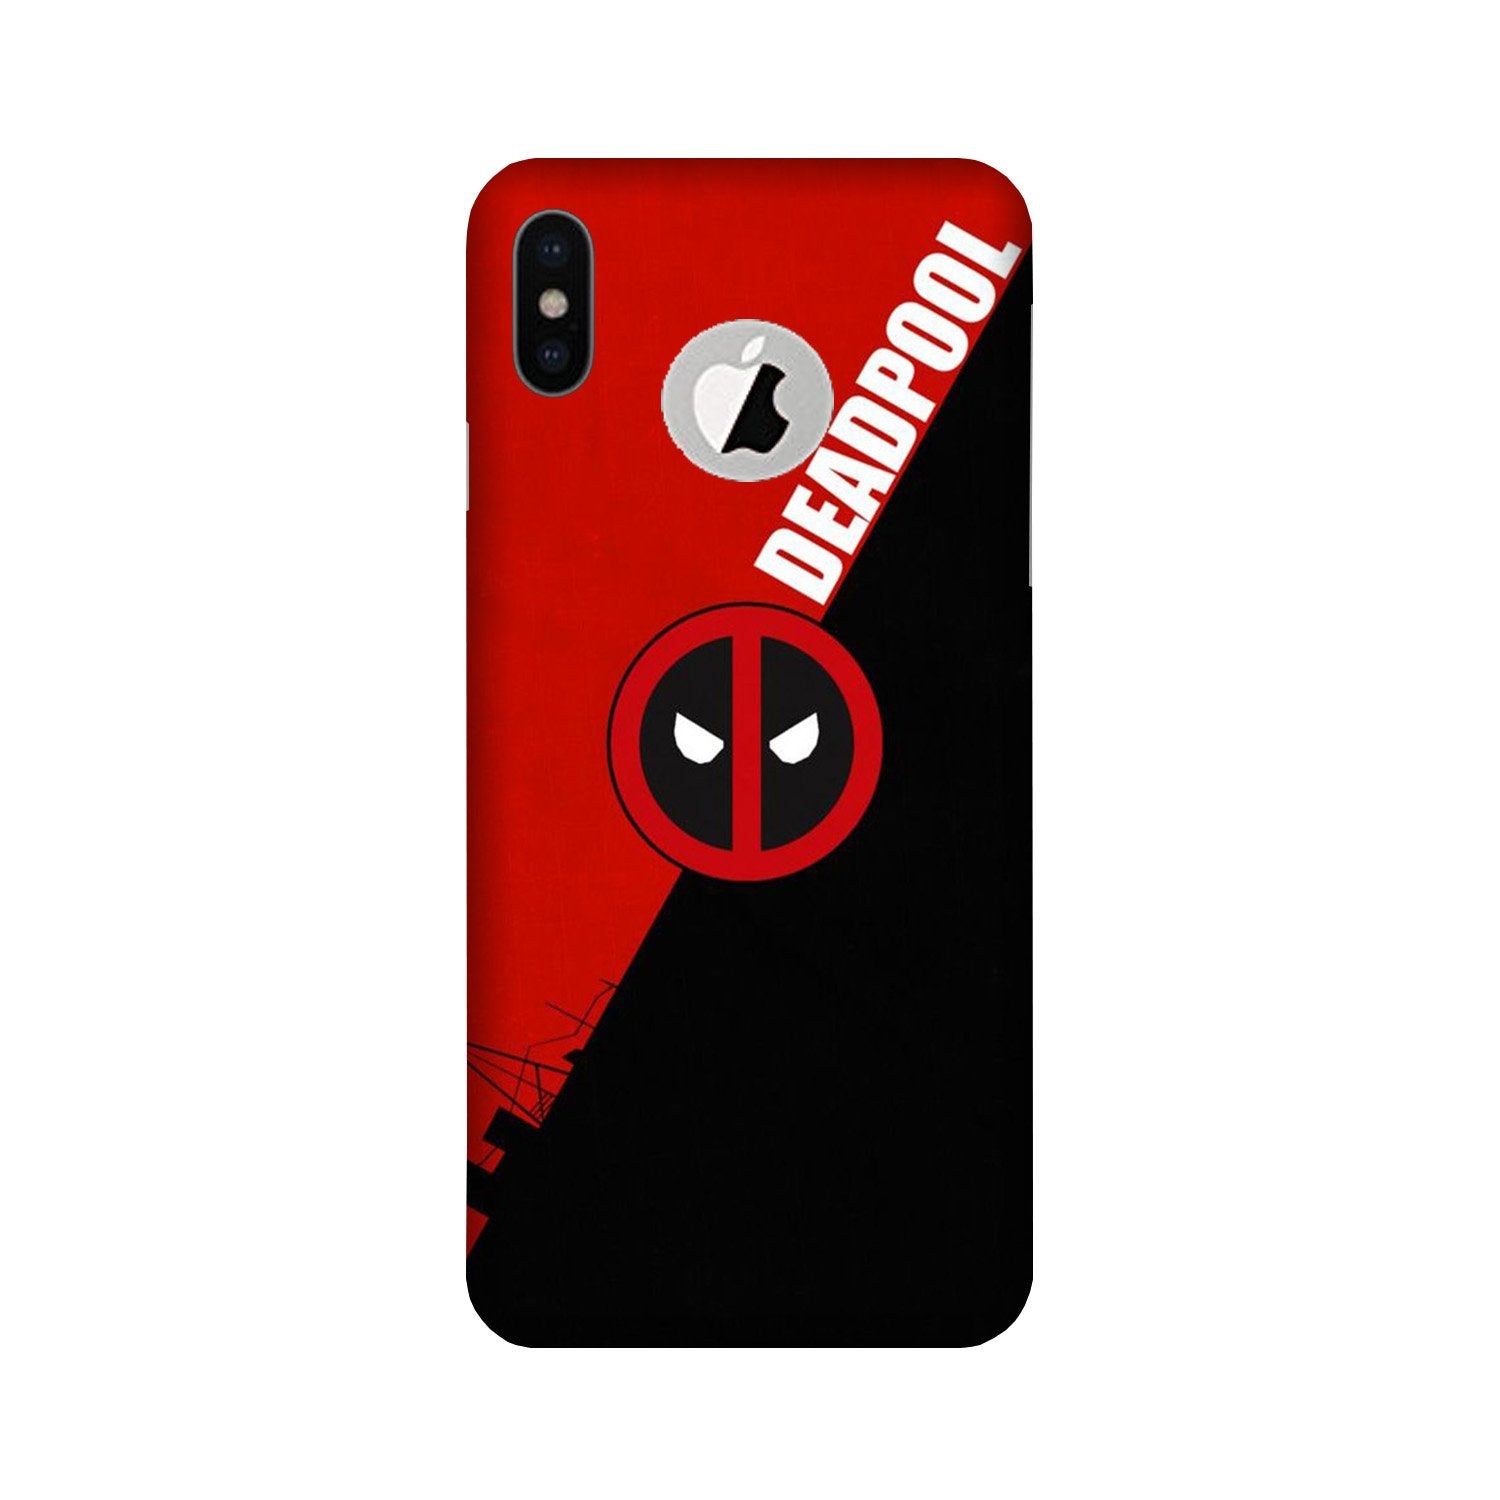 Deadpool Case for iPhone X logo cut (Design No. 248)